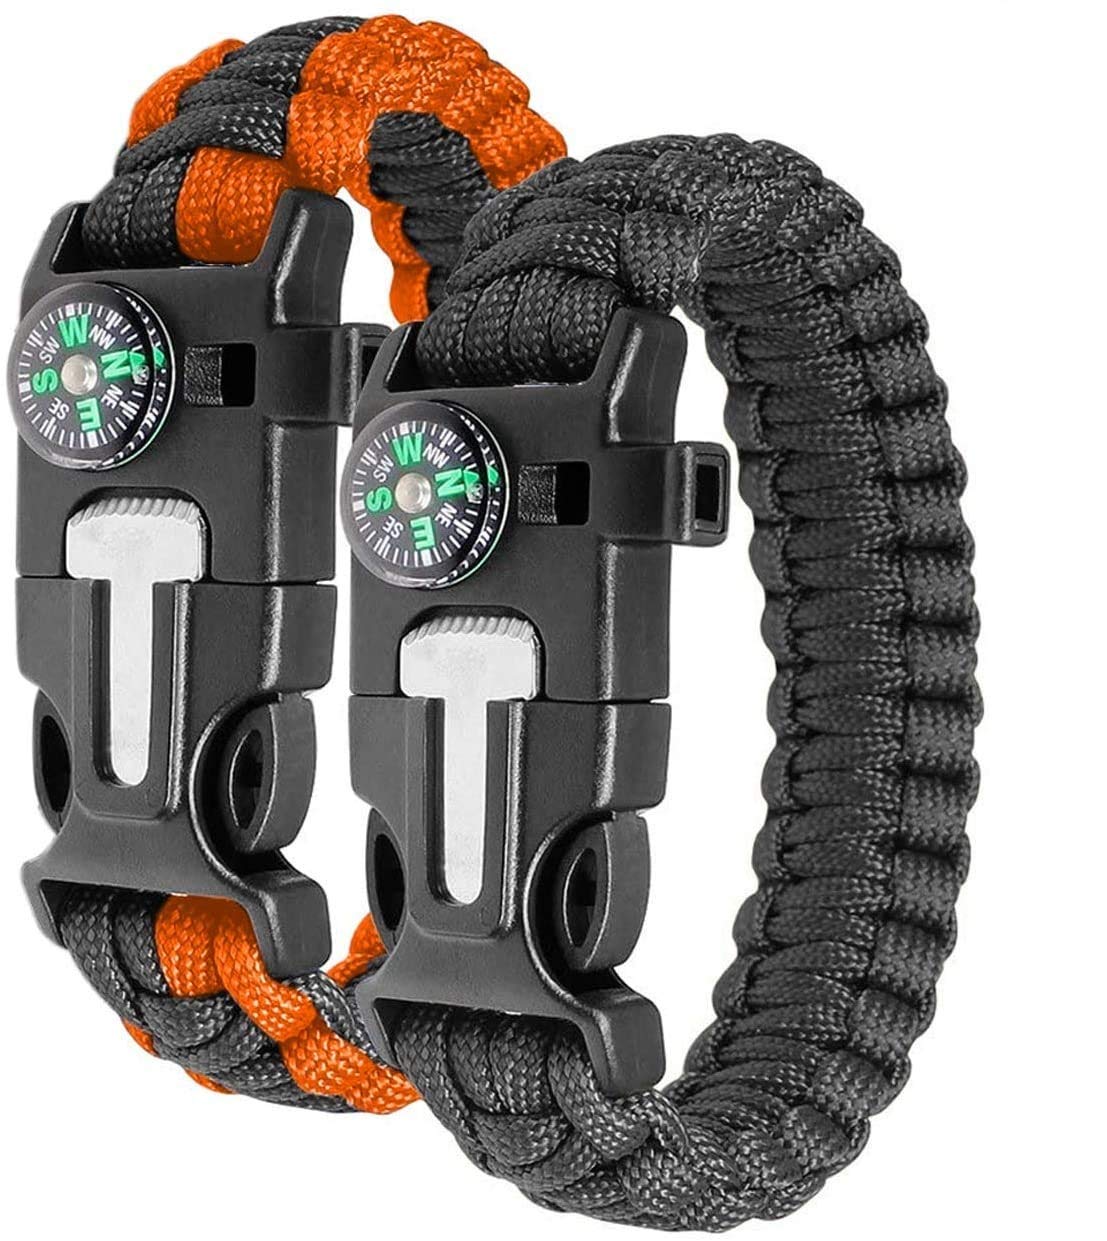 Ember Rock Paracord Survival Bracelet - 2 Pack Survival Kit Firestarter Bracelets - Includes Compass, Firesteel, Whistle and Parachute Cord